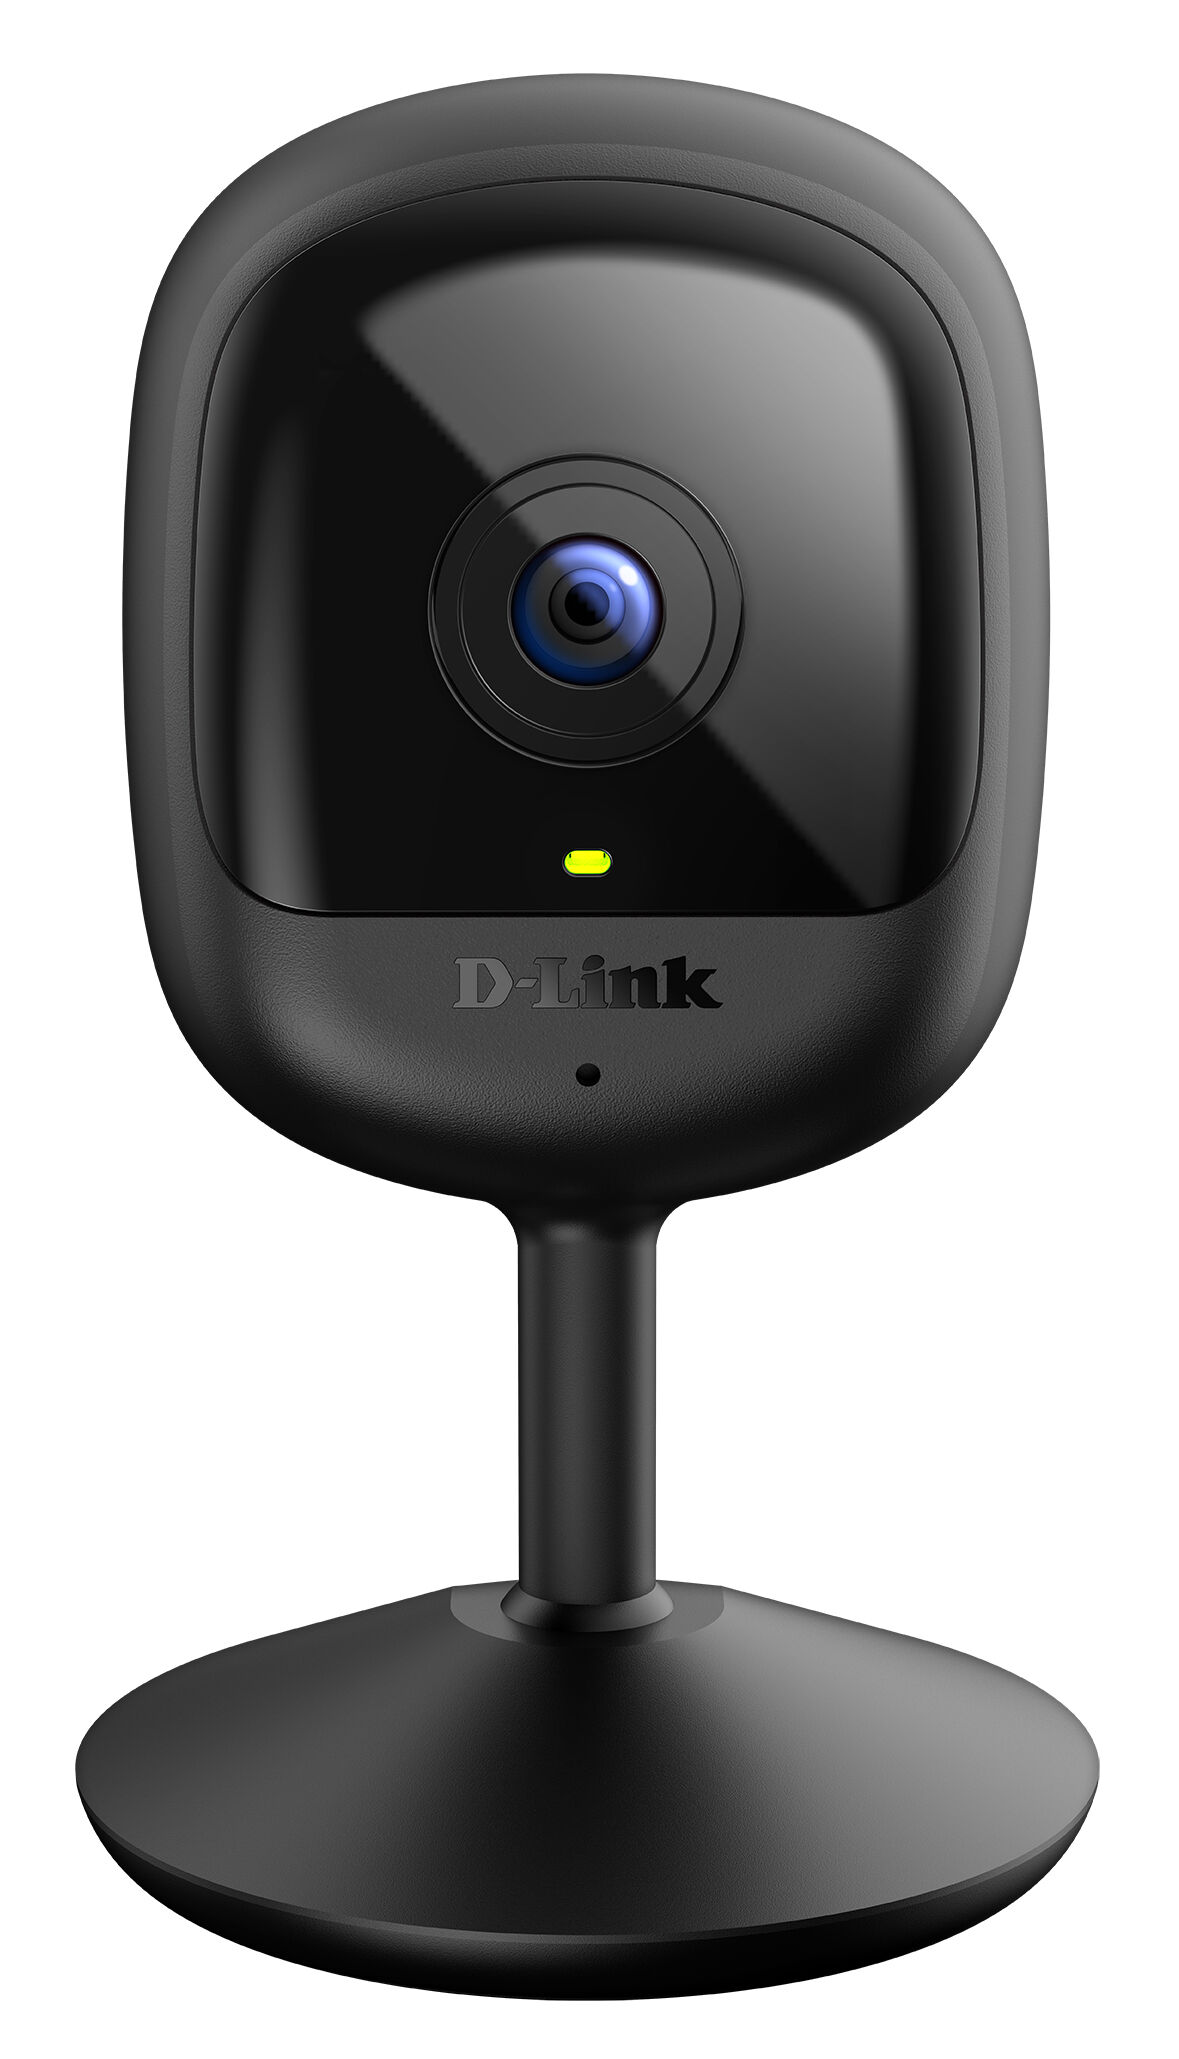 D-Link Compact Full HD Wi-Fi Camera DCS-6100LH/E